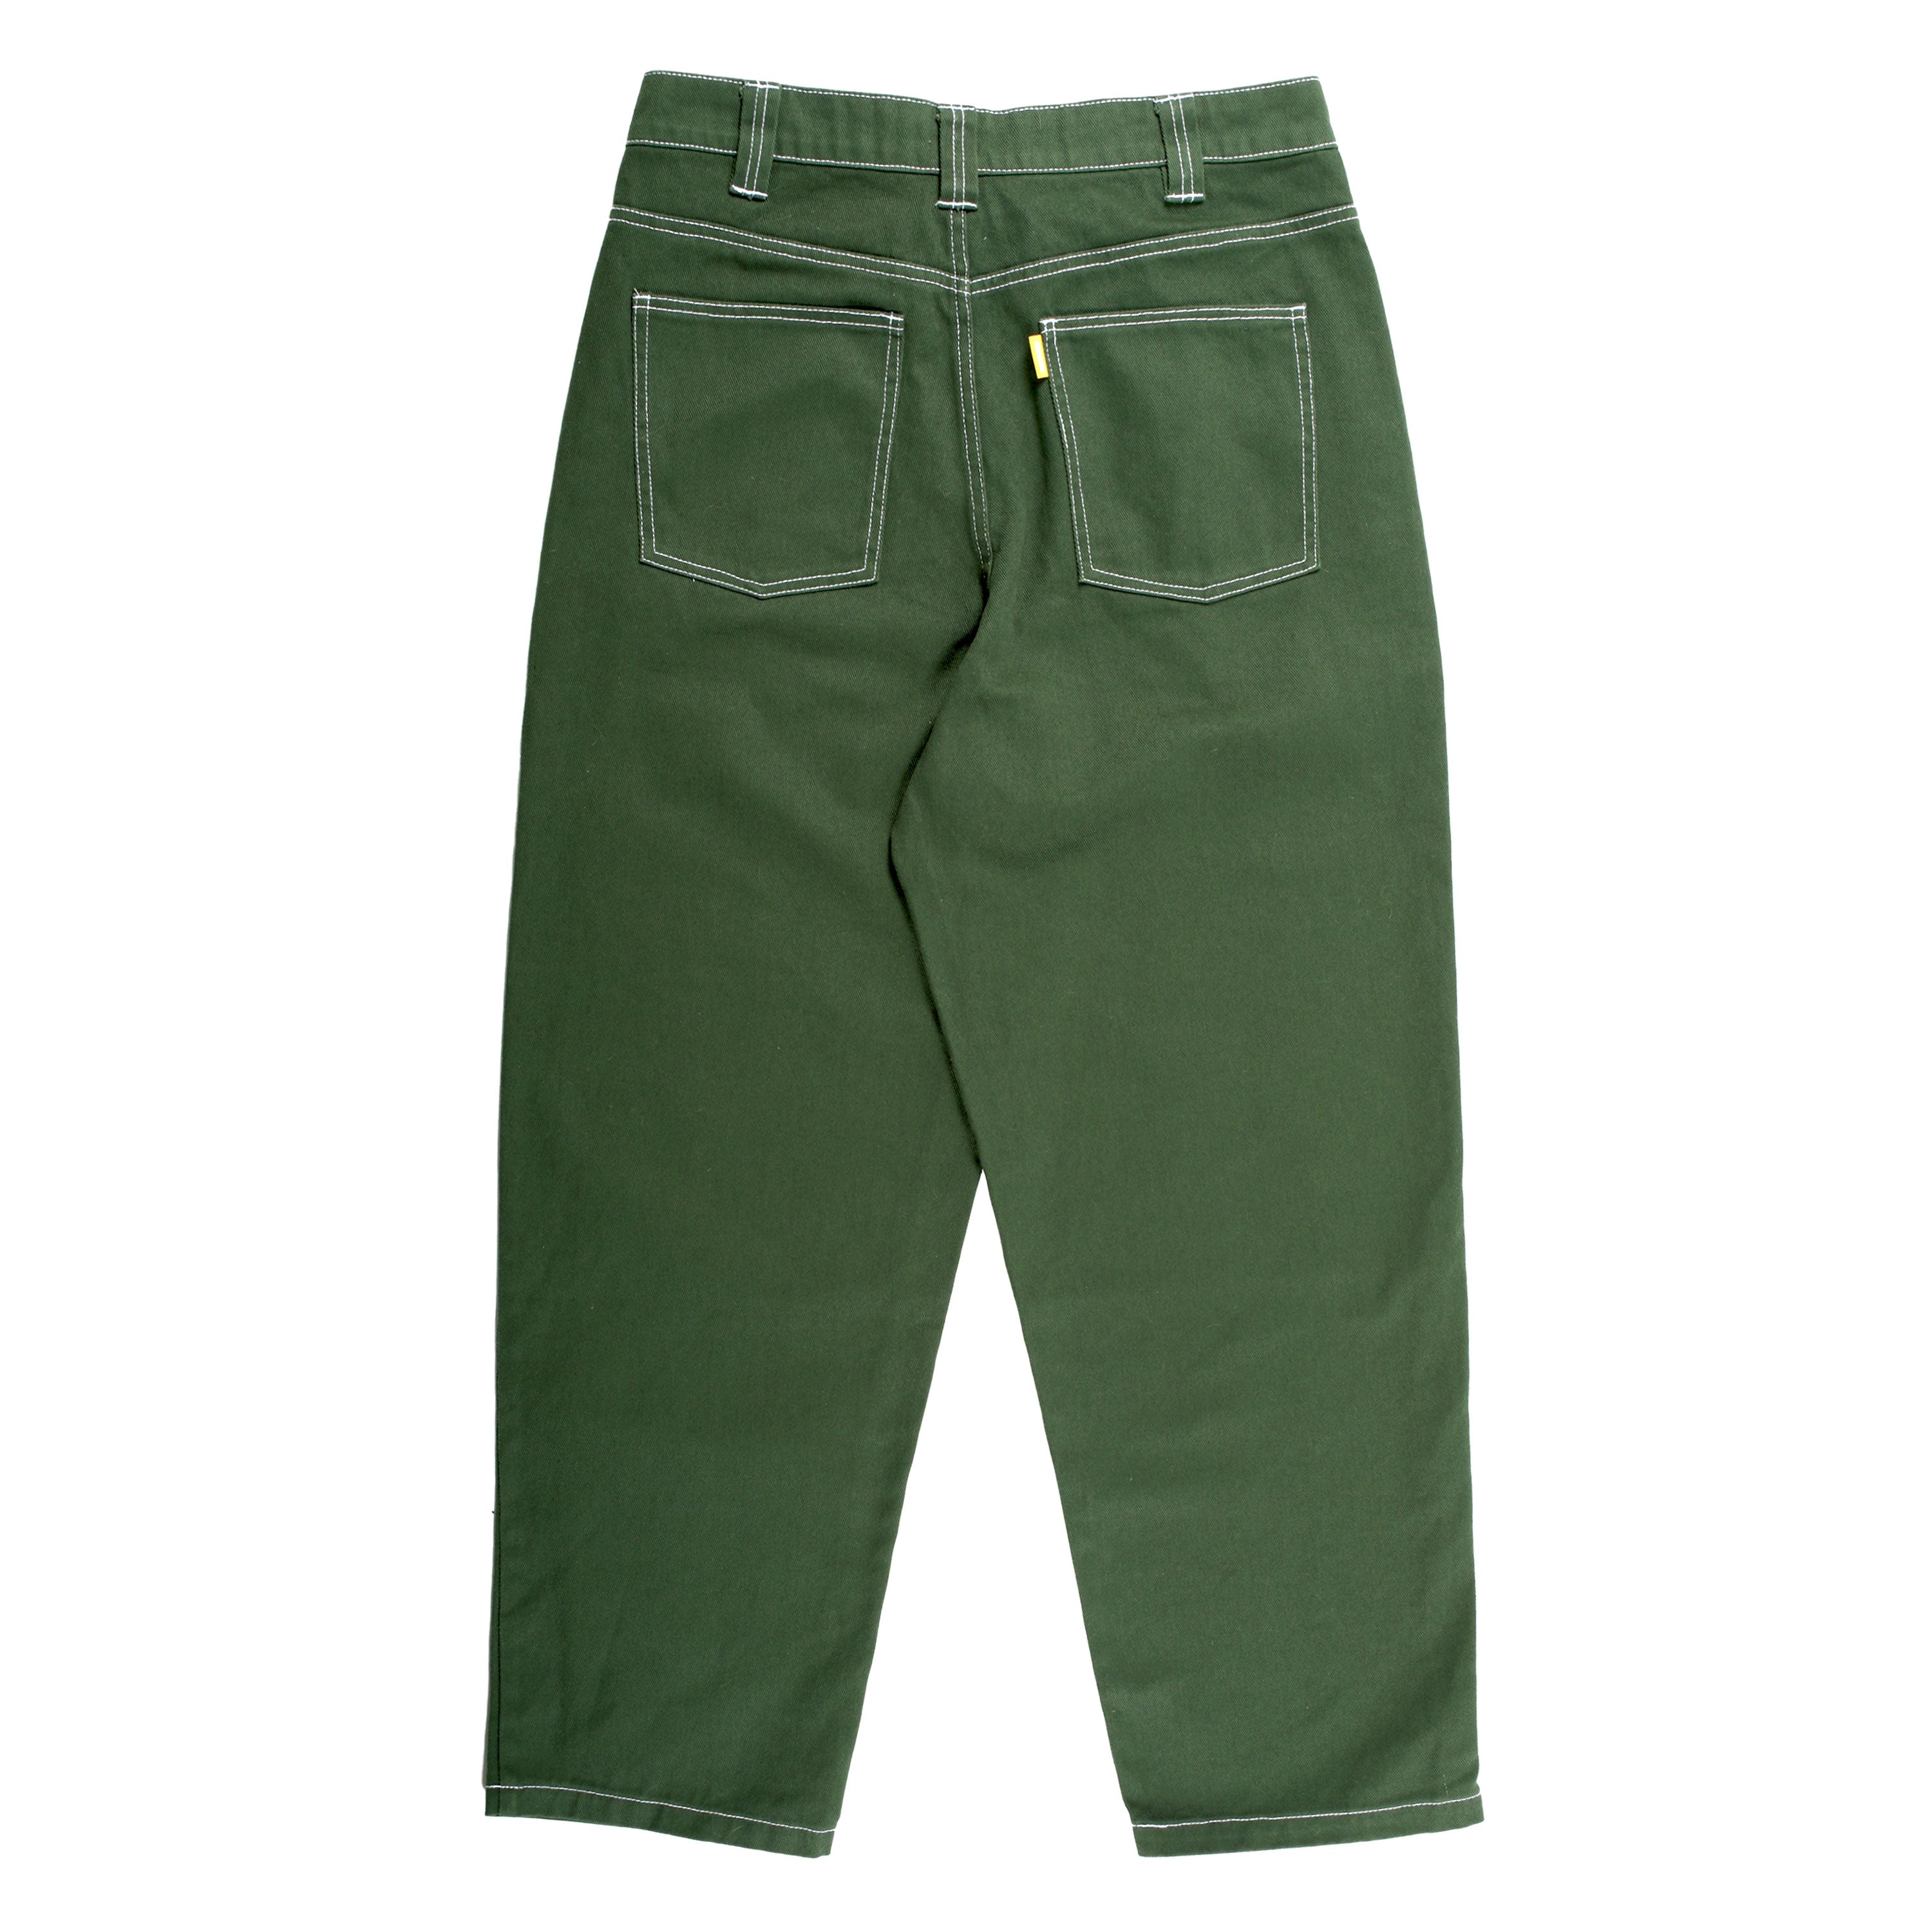 Straight Linen Pants - PUGLIA wide legs and elastic waistband